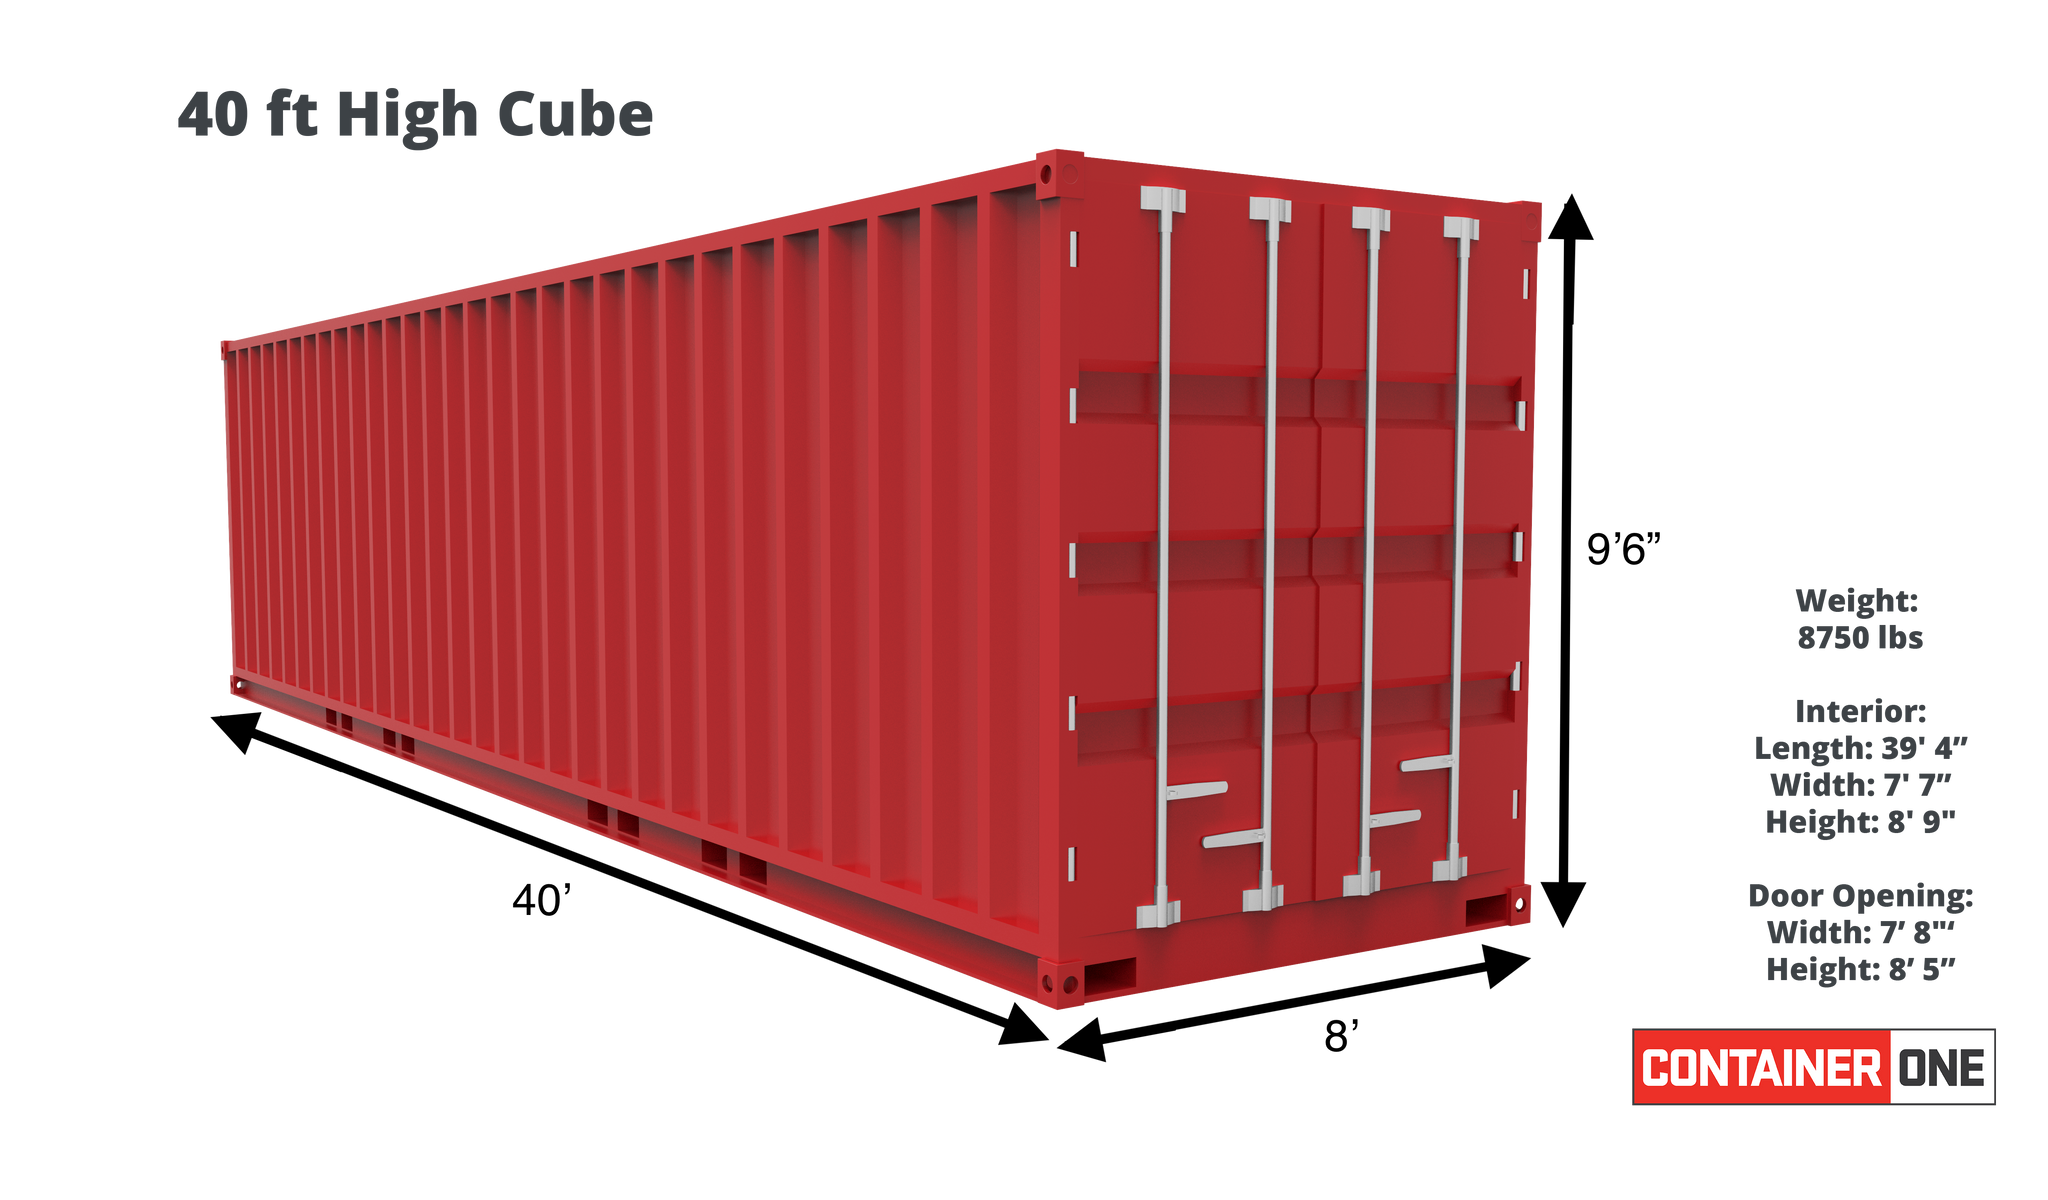 Контейнер 40 HC/hq (High Cube). 40 Футовый High Cube контейнер DC ISO. Габариты 20 футового контейнера High Cube. Габариты контейнера 40 футов High Cube. Вес морского контейнера 40